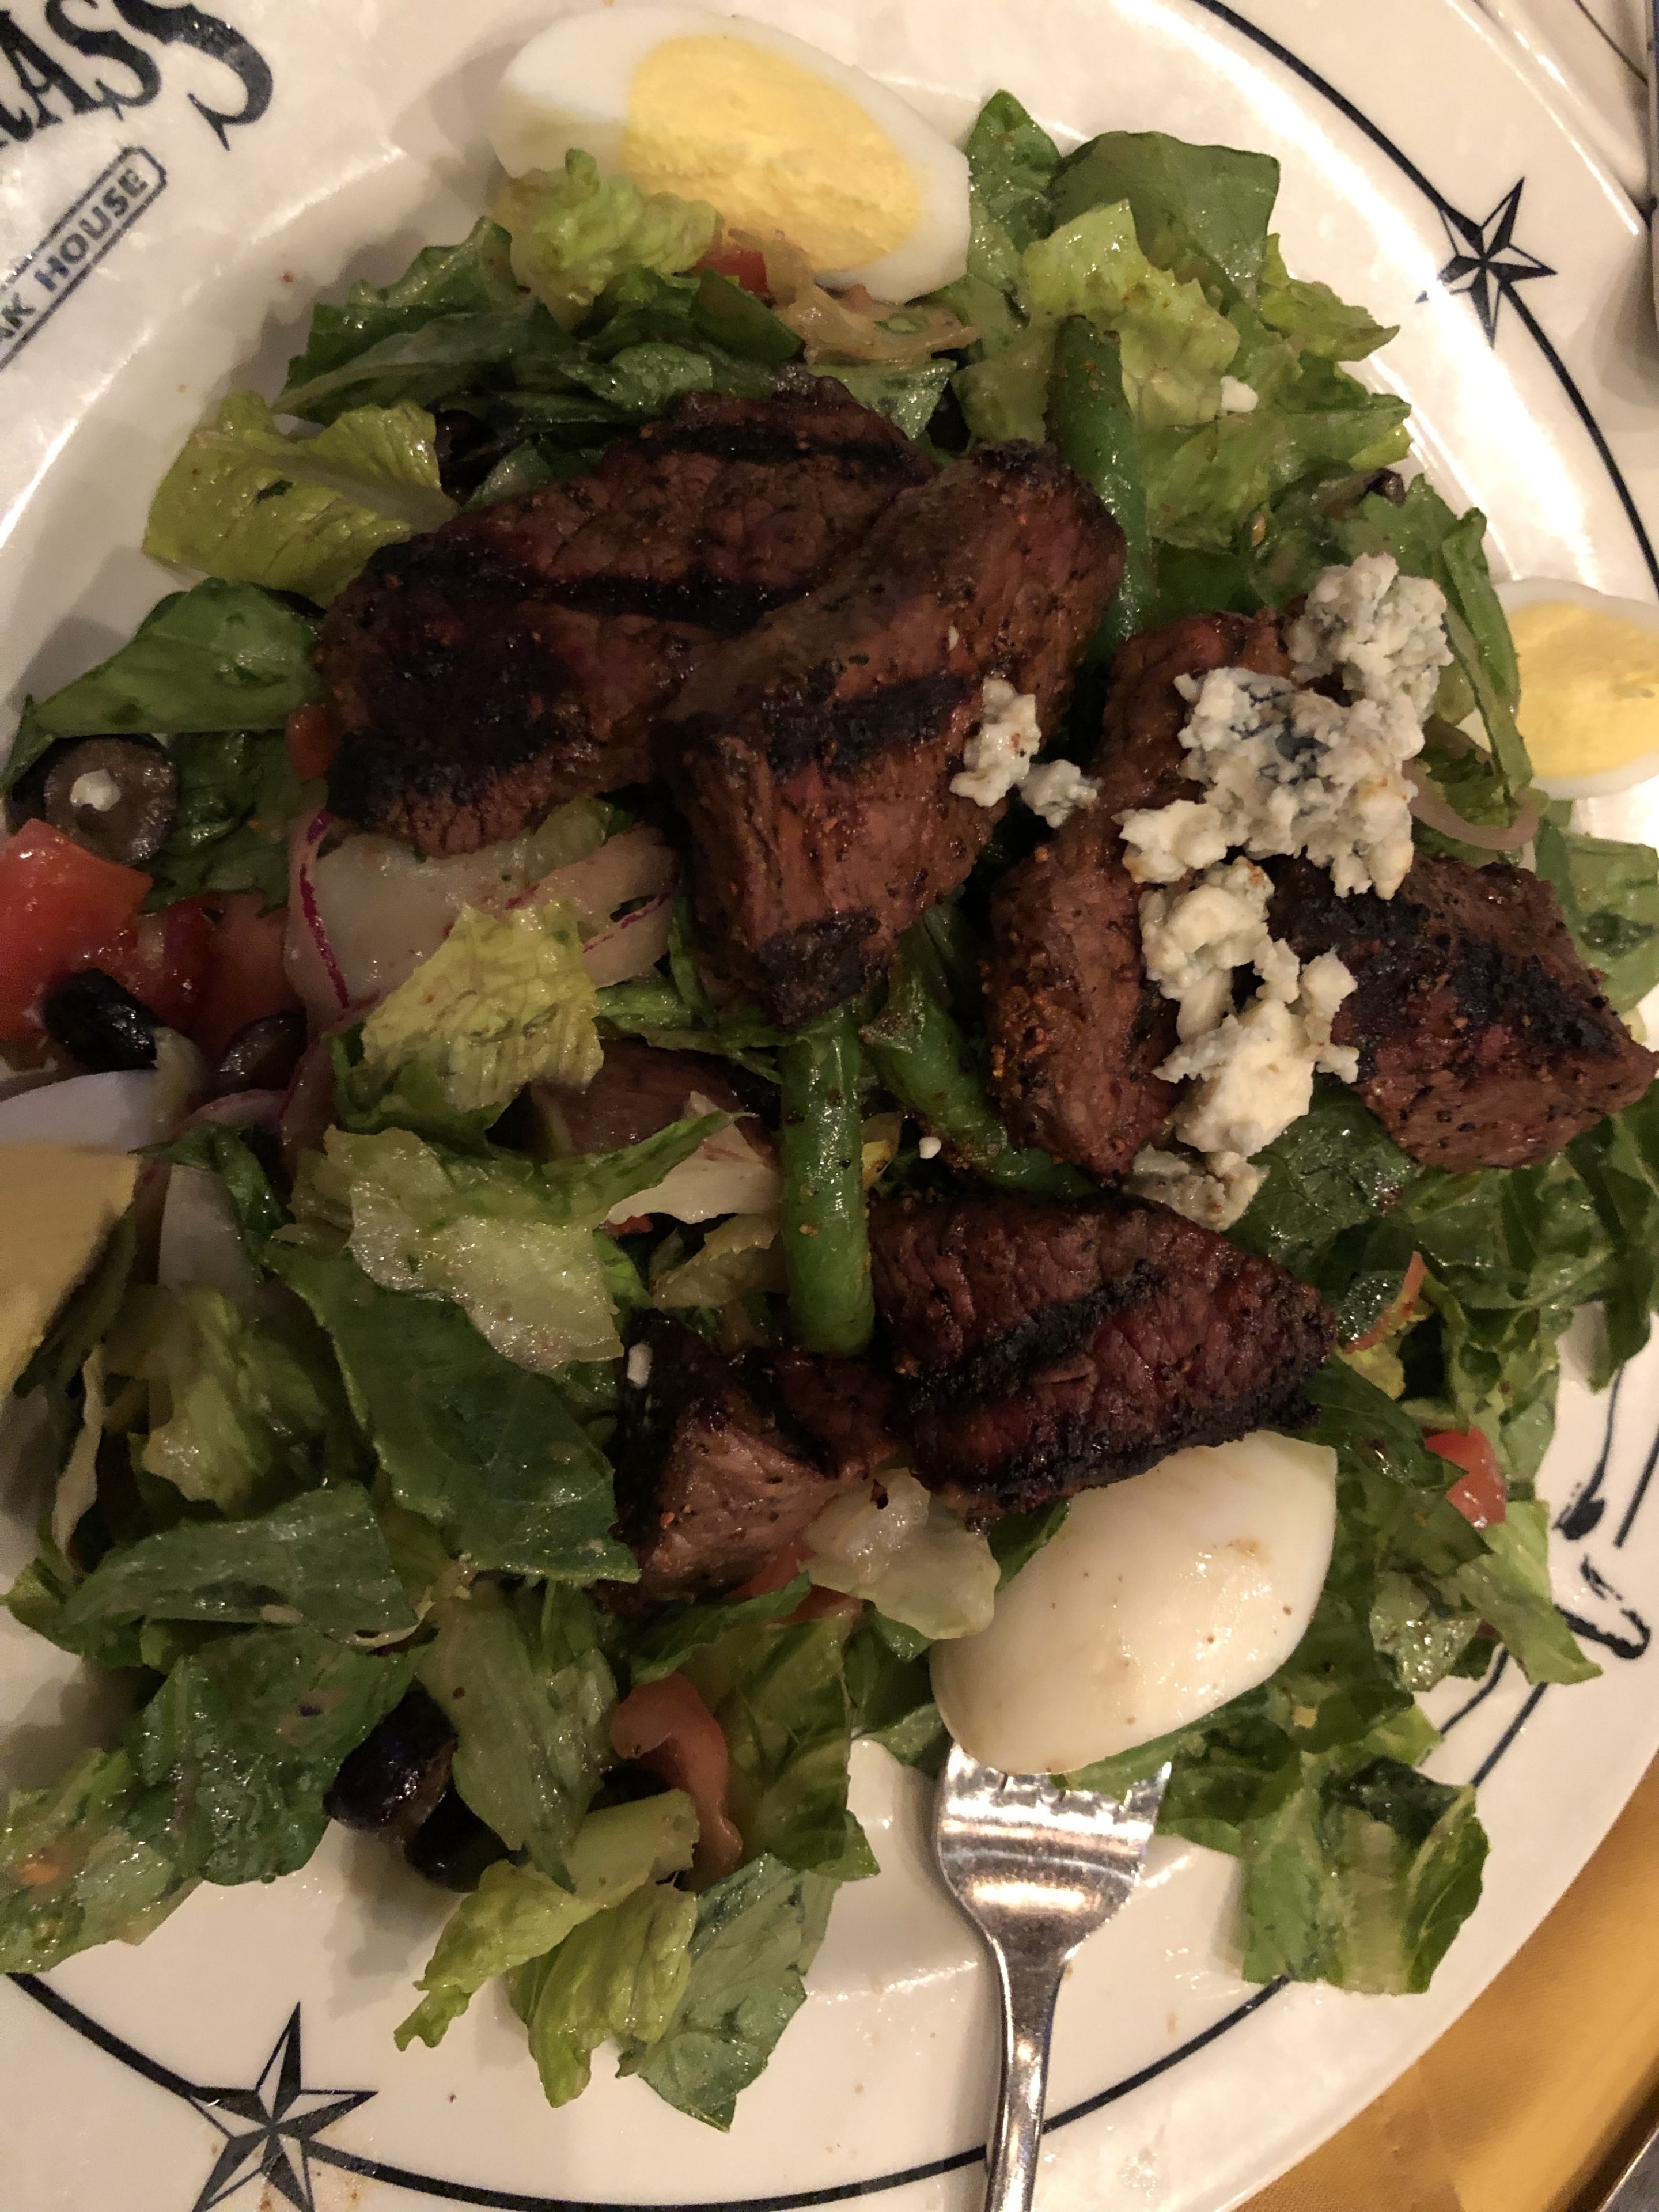 Steak salad from Saltgrass!